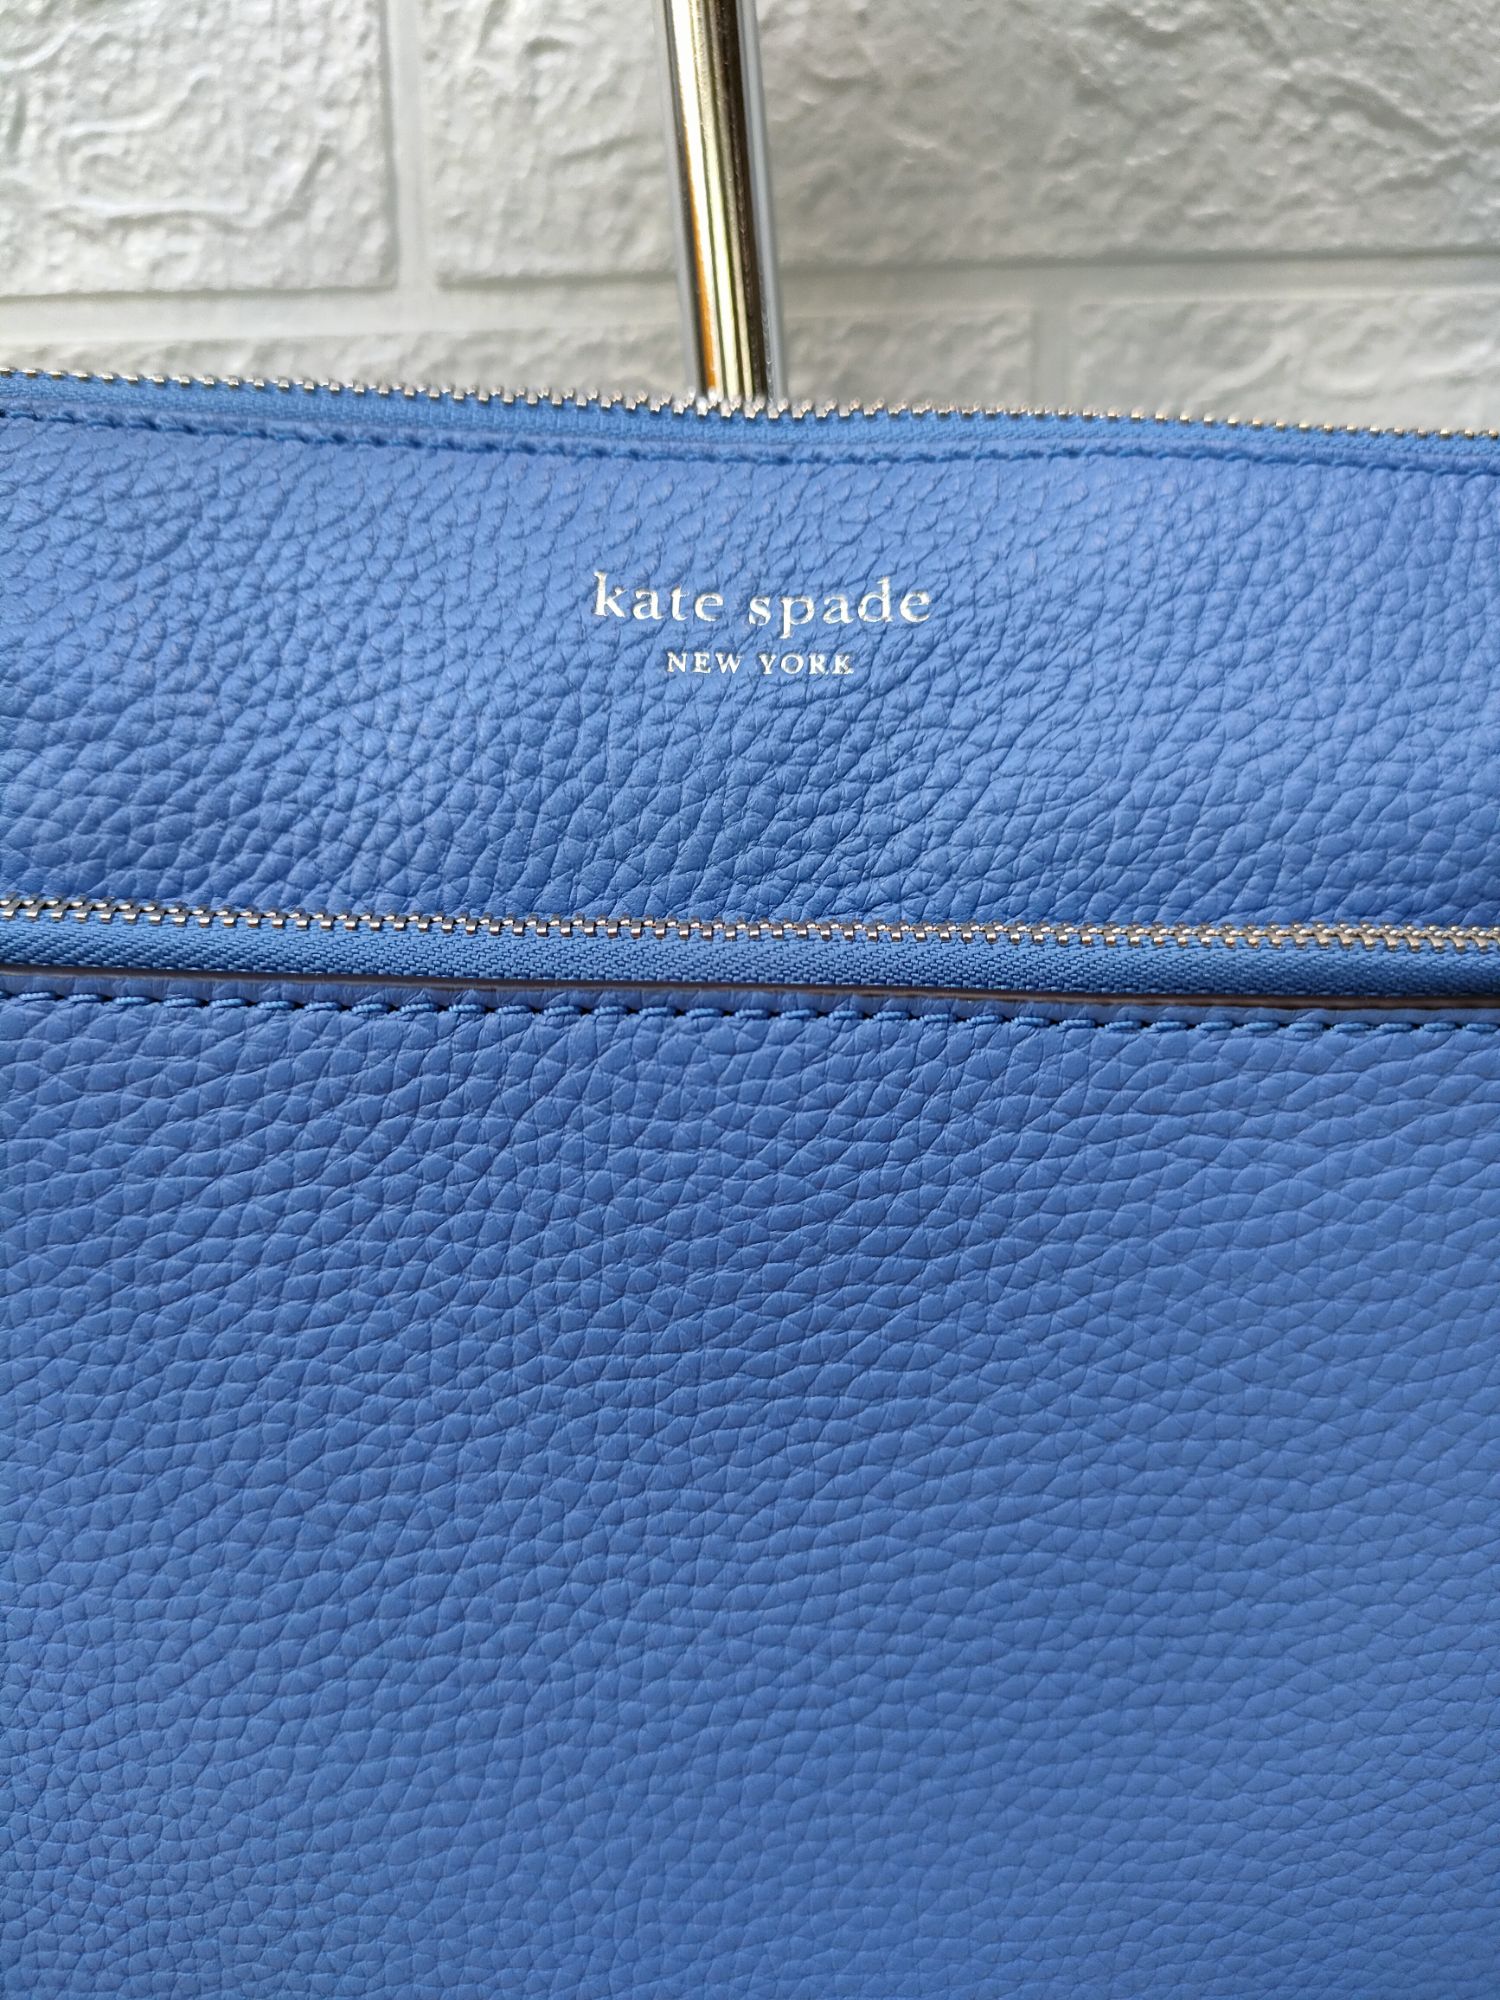 Kate Spade Carson Convertible Crossbody Handbag, Dark Water price in UAE,  UAE